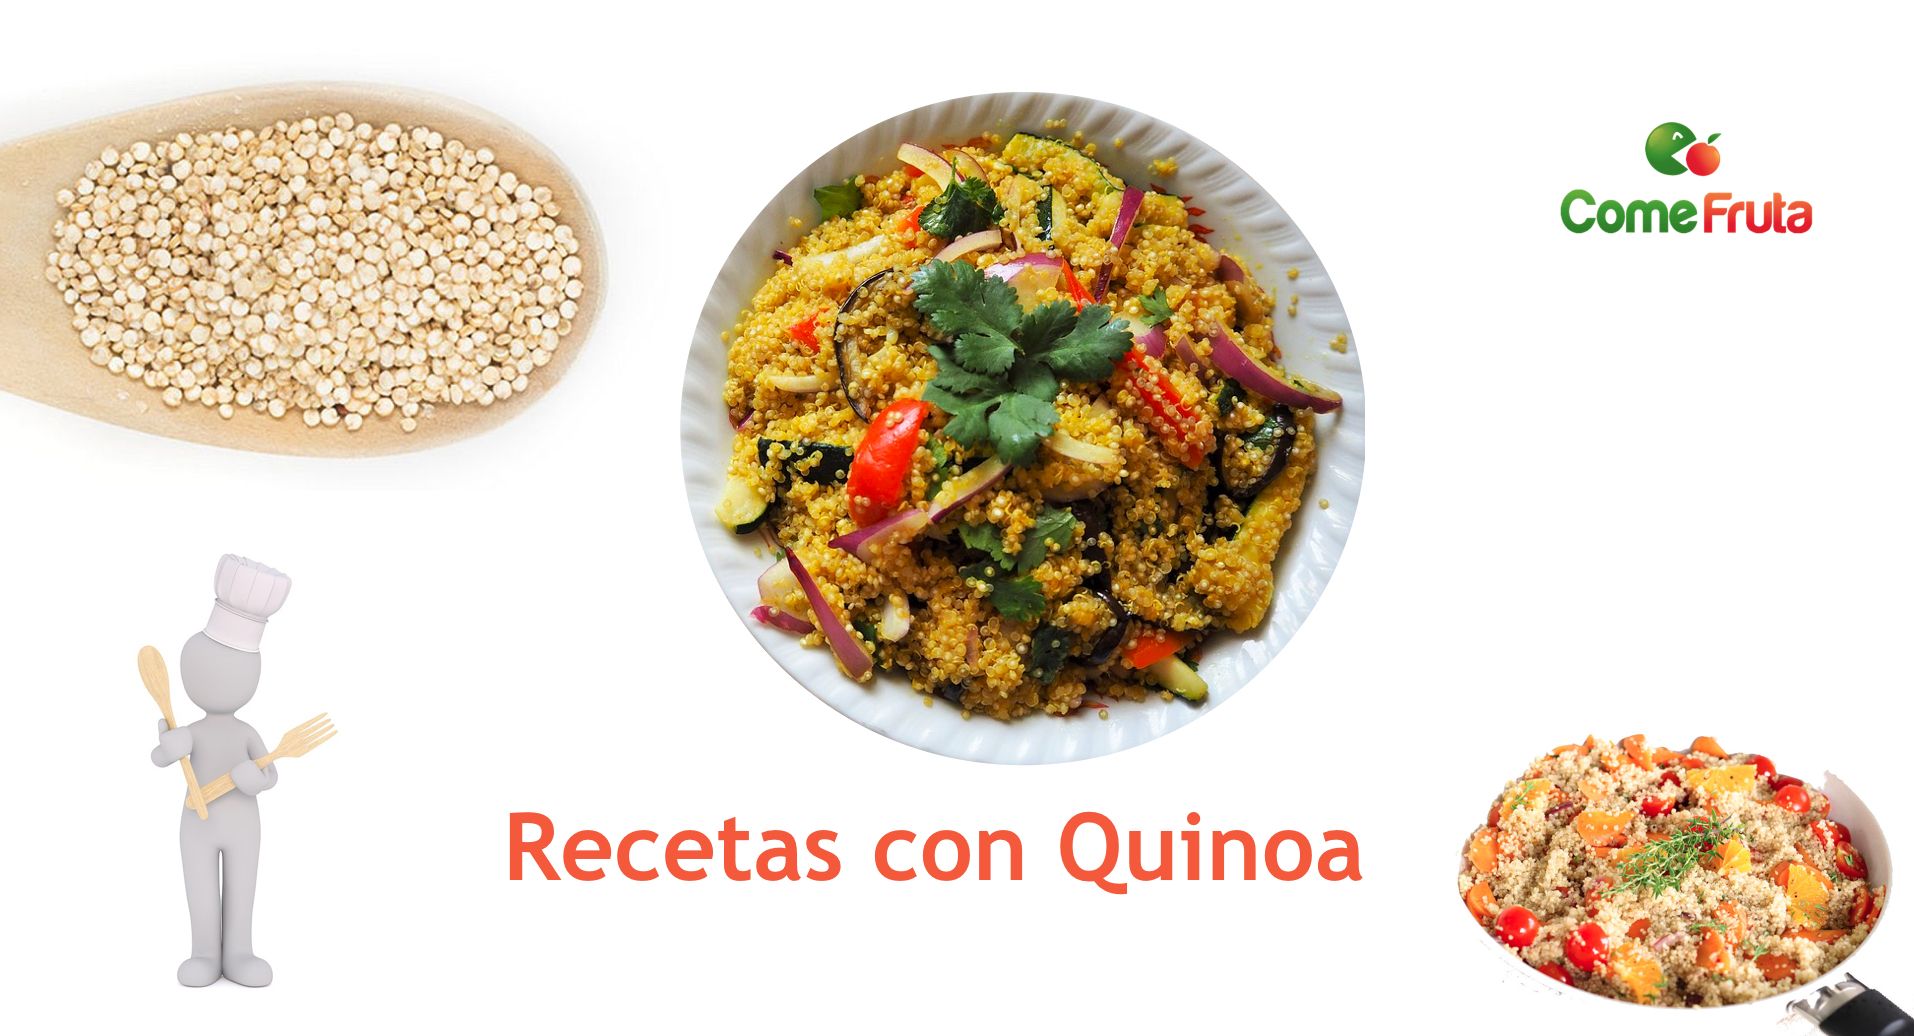 Recetas con Quinoa - Recetas